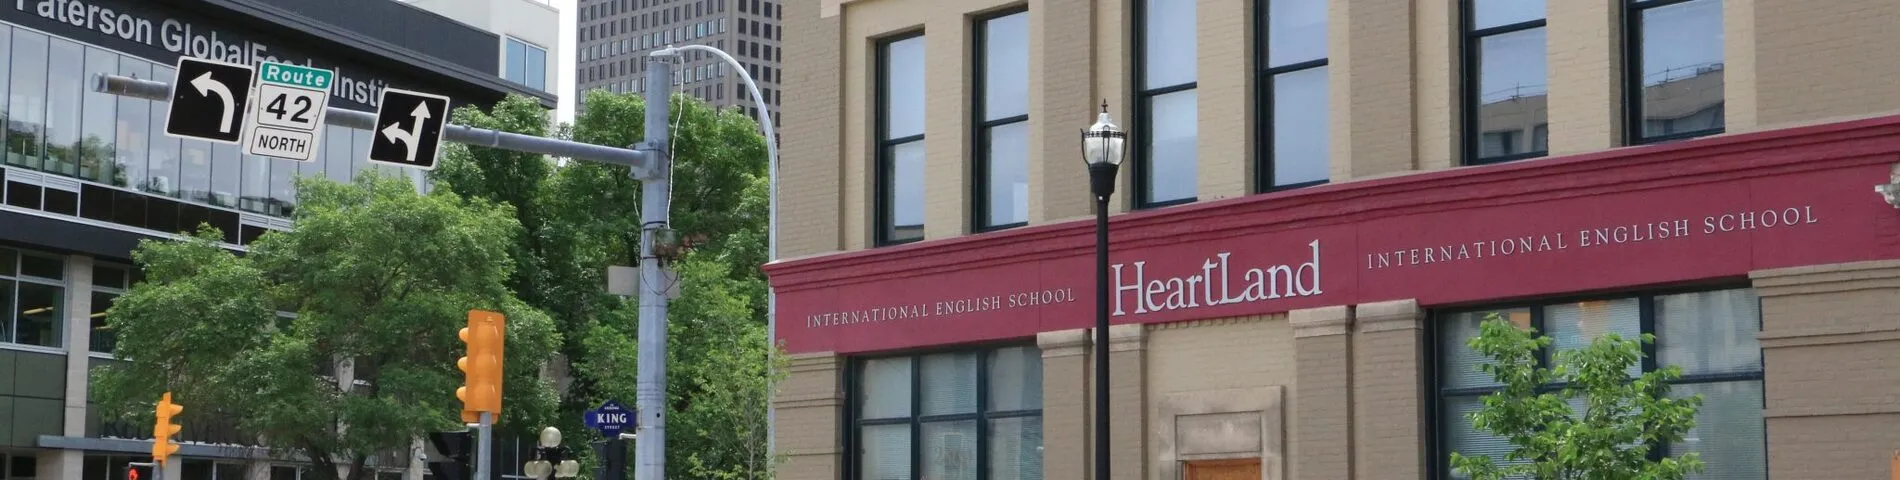 Heartland International English School bilde 1